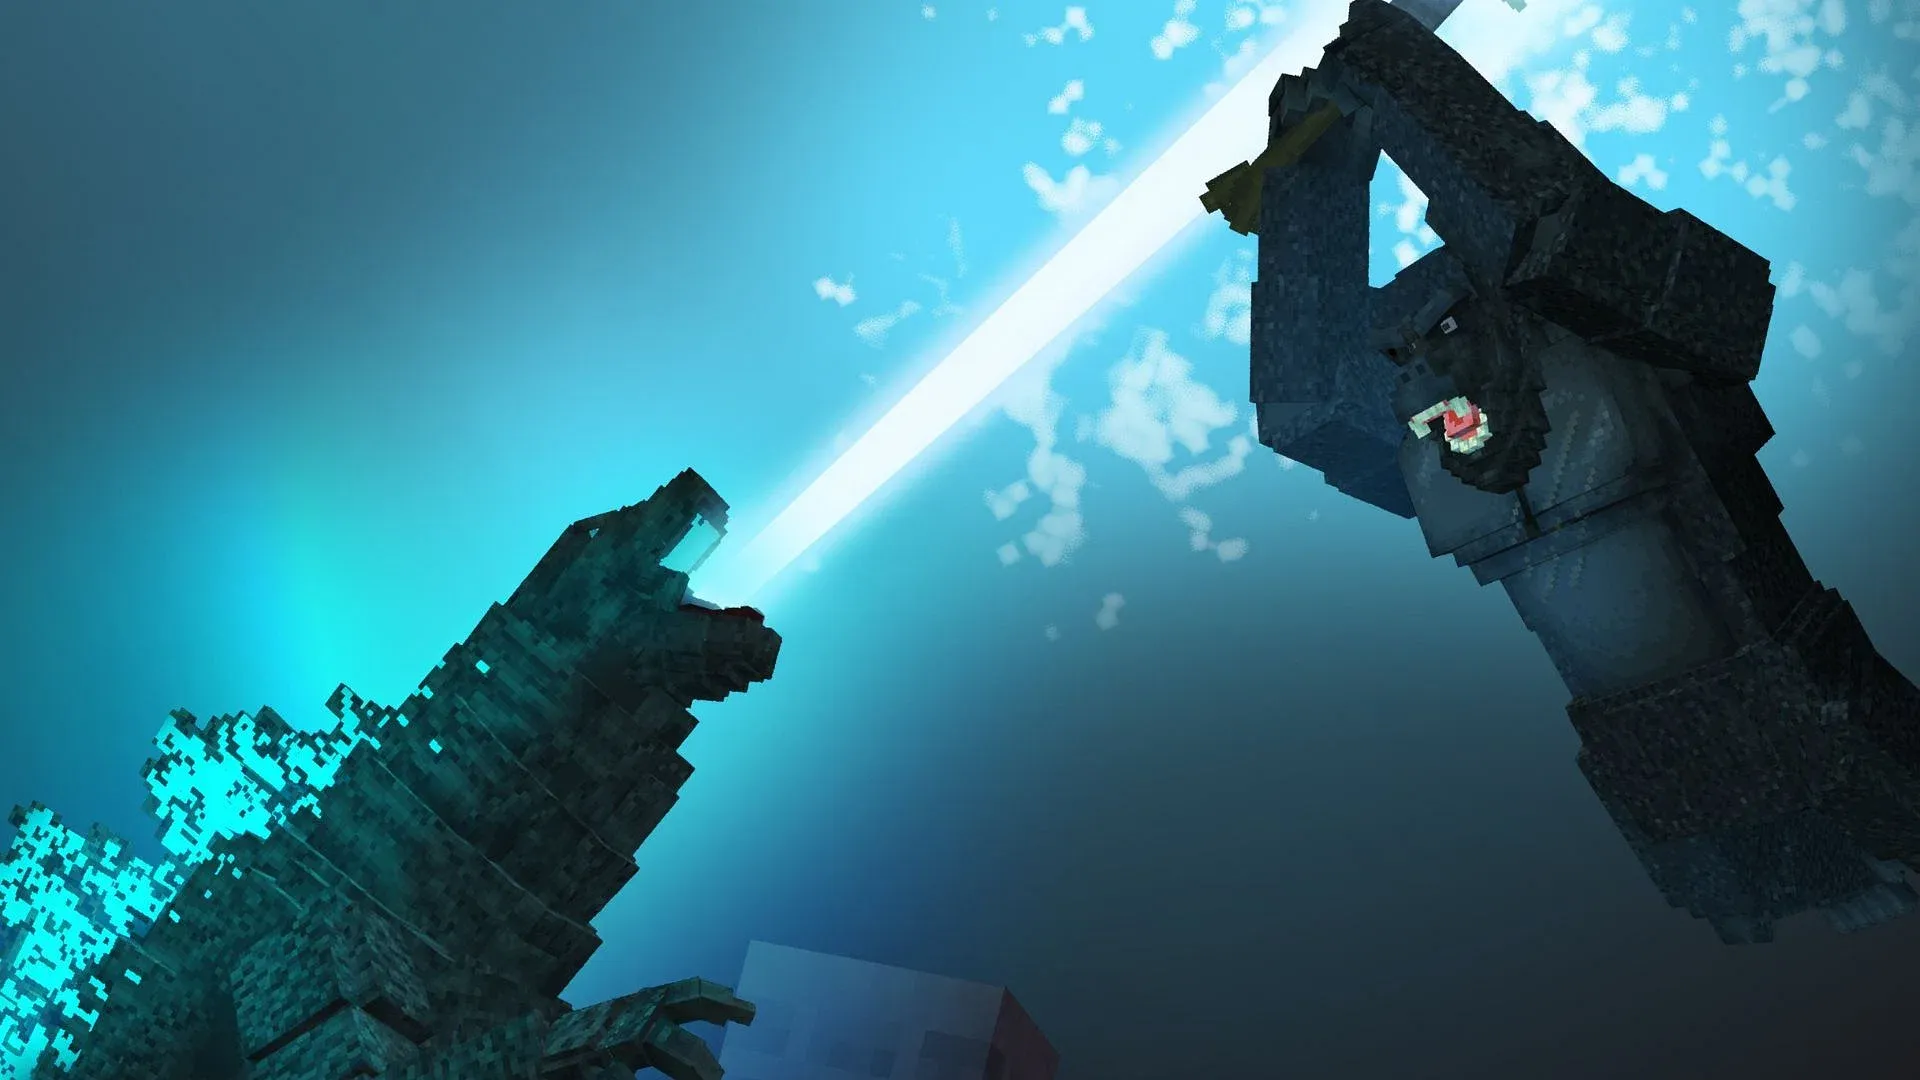 Hướng dẫn cách chơi DLC Godzilla trong Minecraft